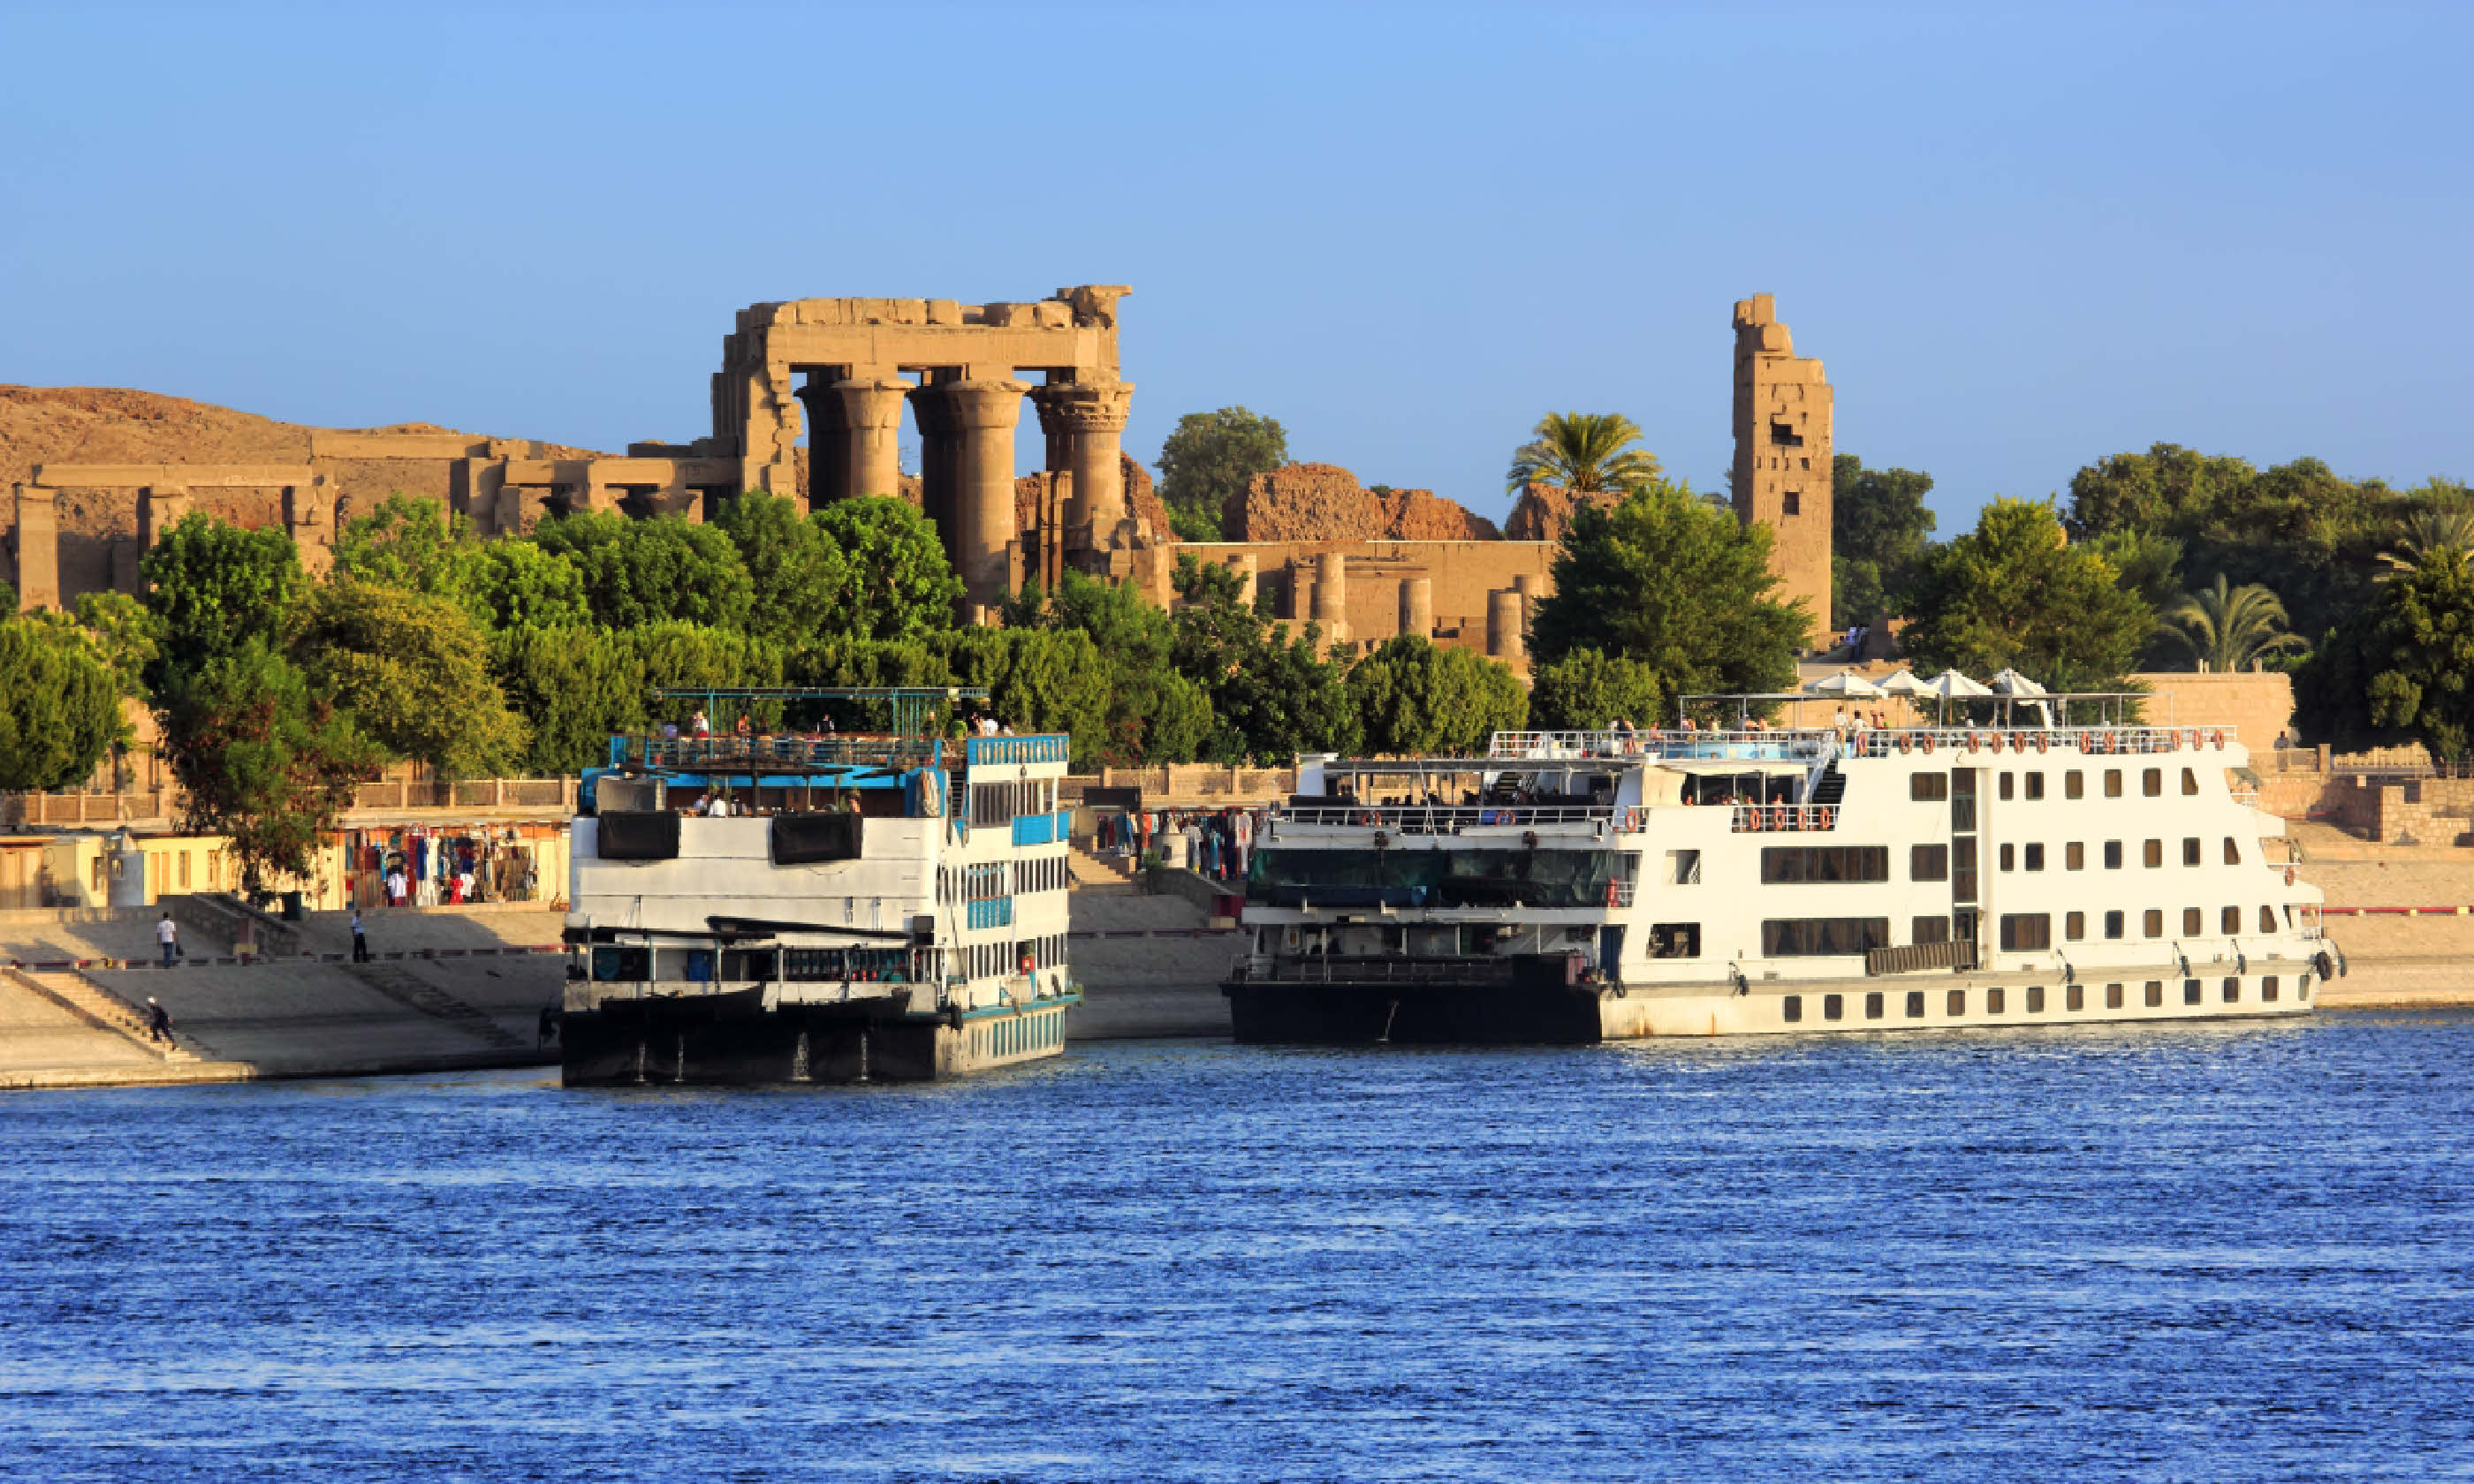 Cruise ships docked at Kom Ombo on the Nile (Shutterstock)